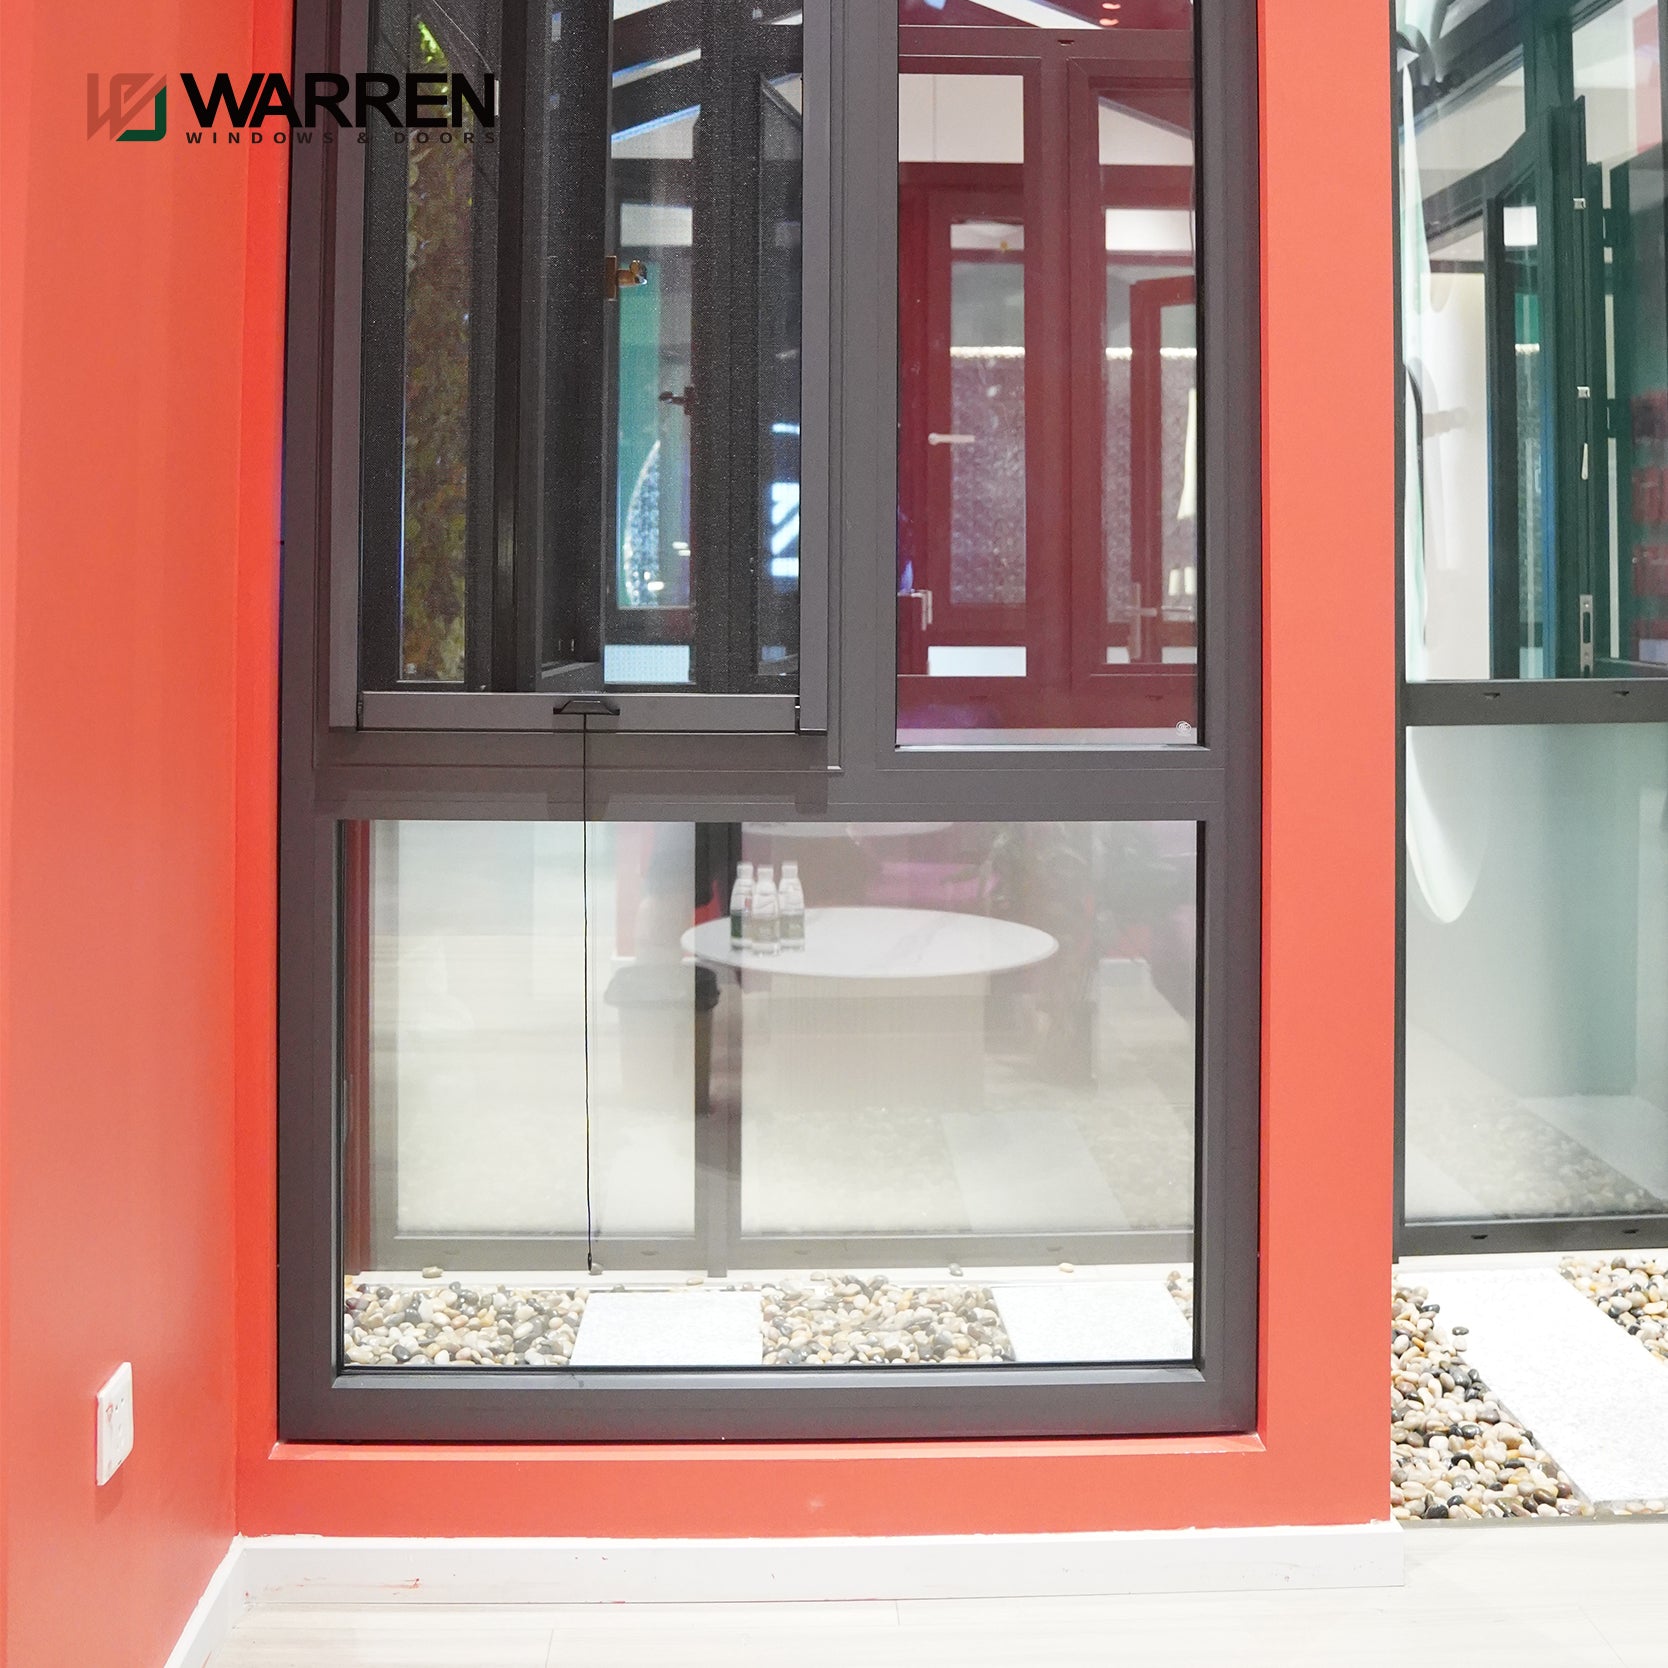 Warren Factory Hot Sales Aluminum Window Frames For Sale Casement Windows Aluminum Window Manufacturer